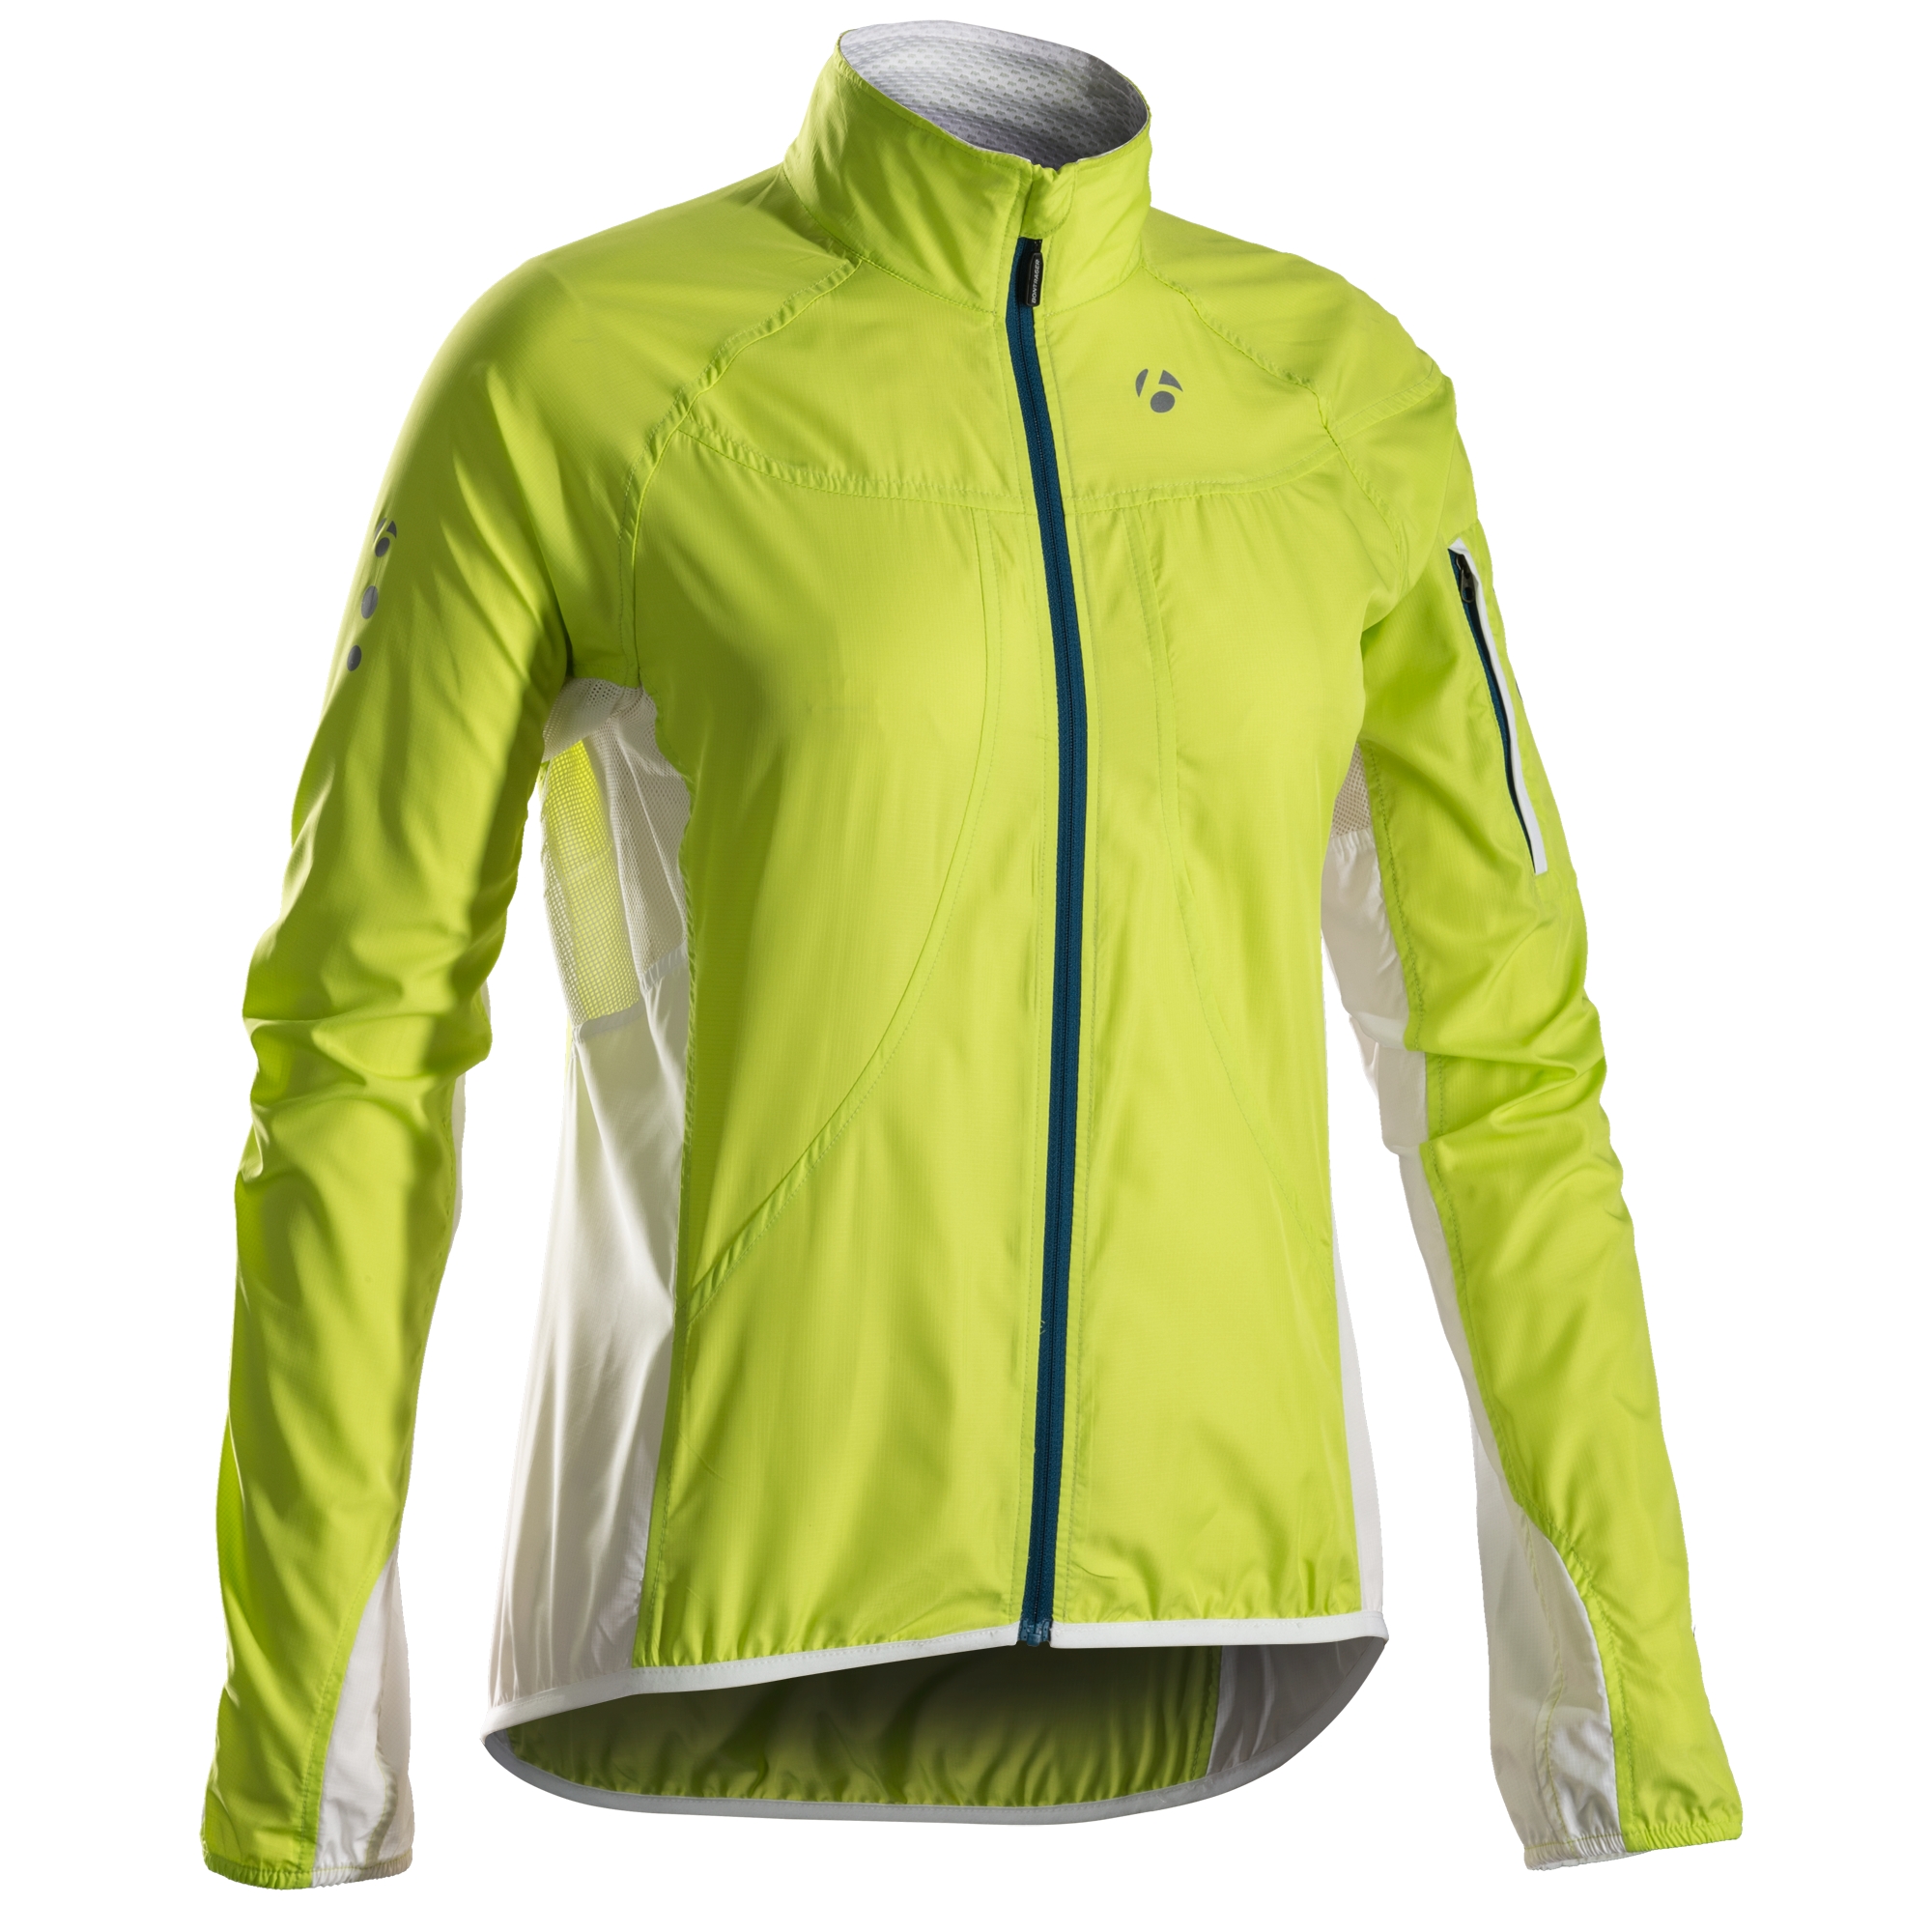 Womens cycling jacket bontrager race windshell blue-white size m 